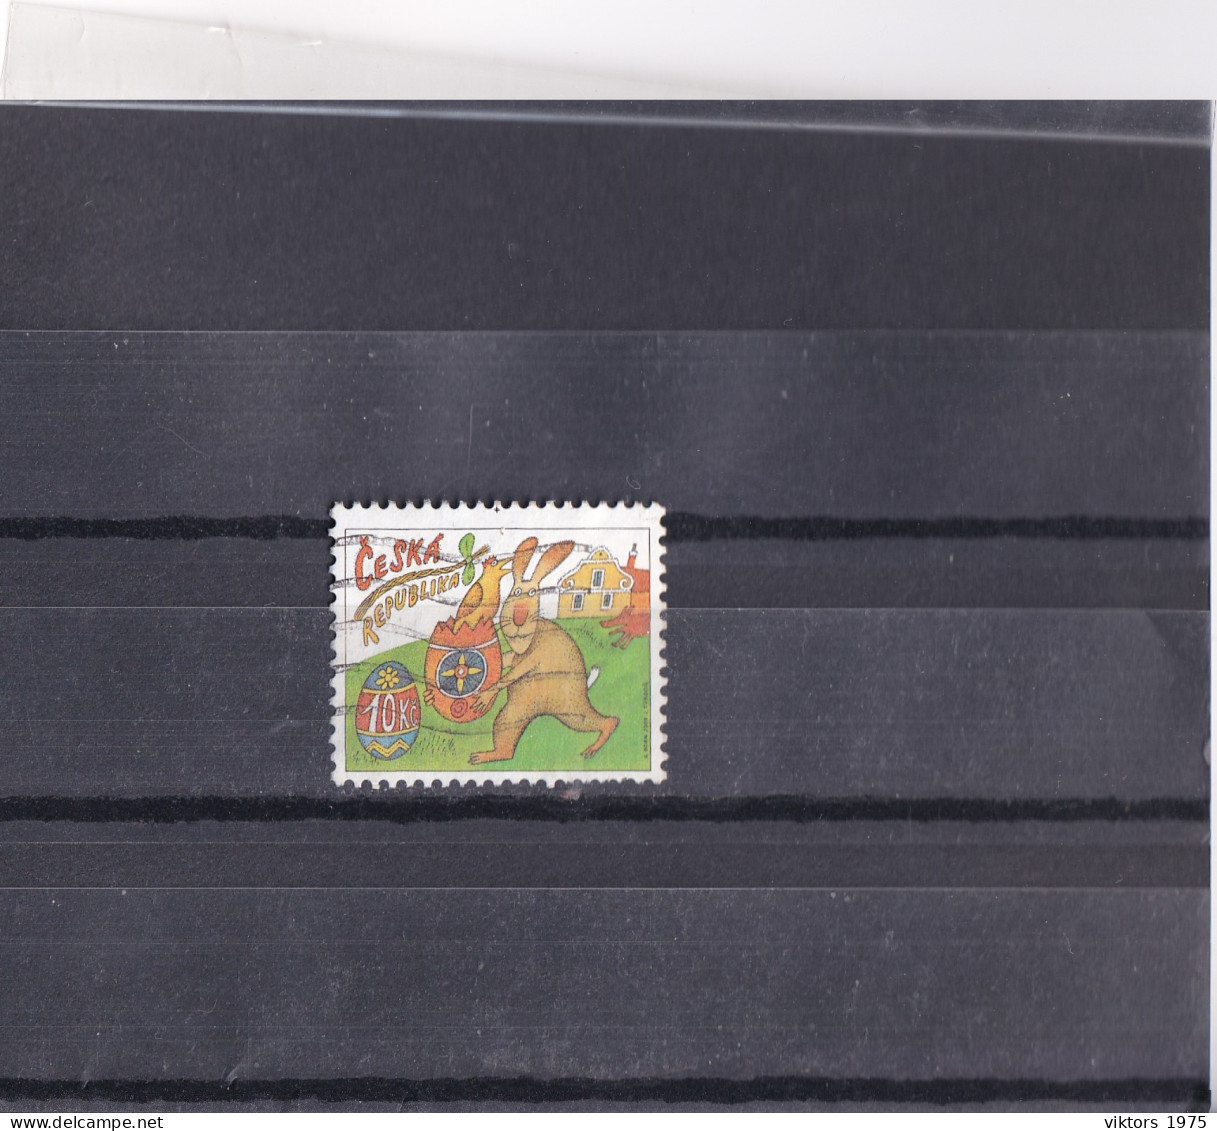 Used Stamp Nr.589 In MICHEL Catalog - Gebraucht